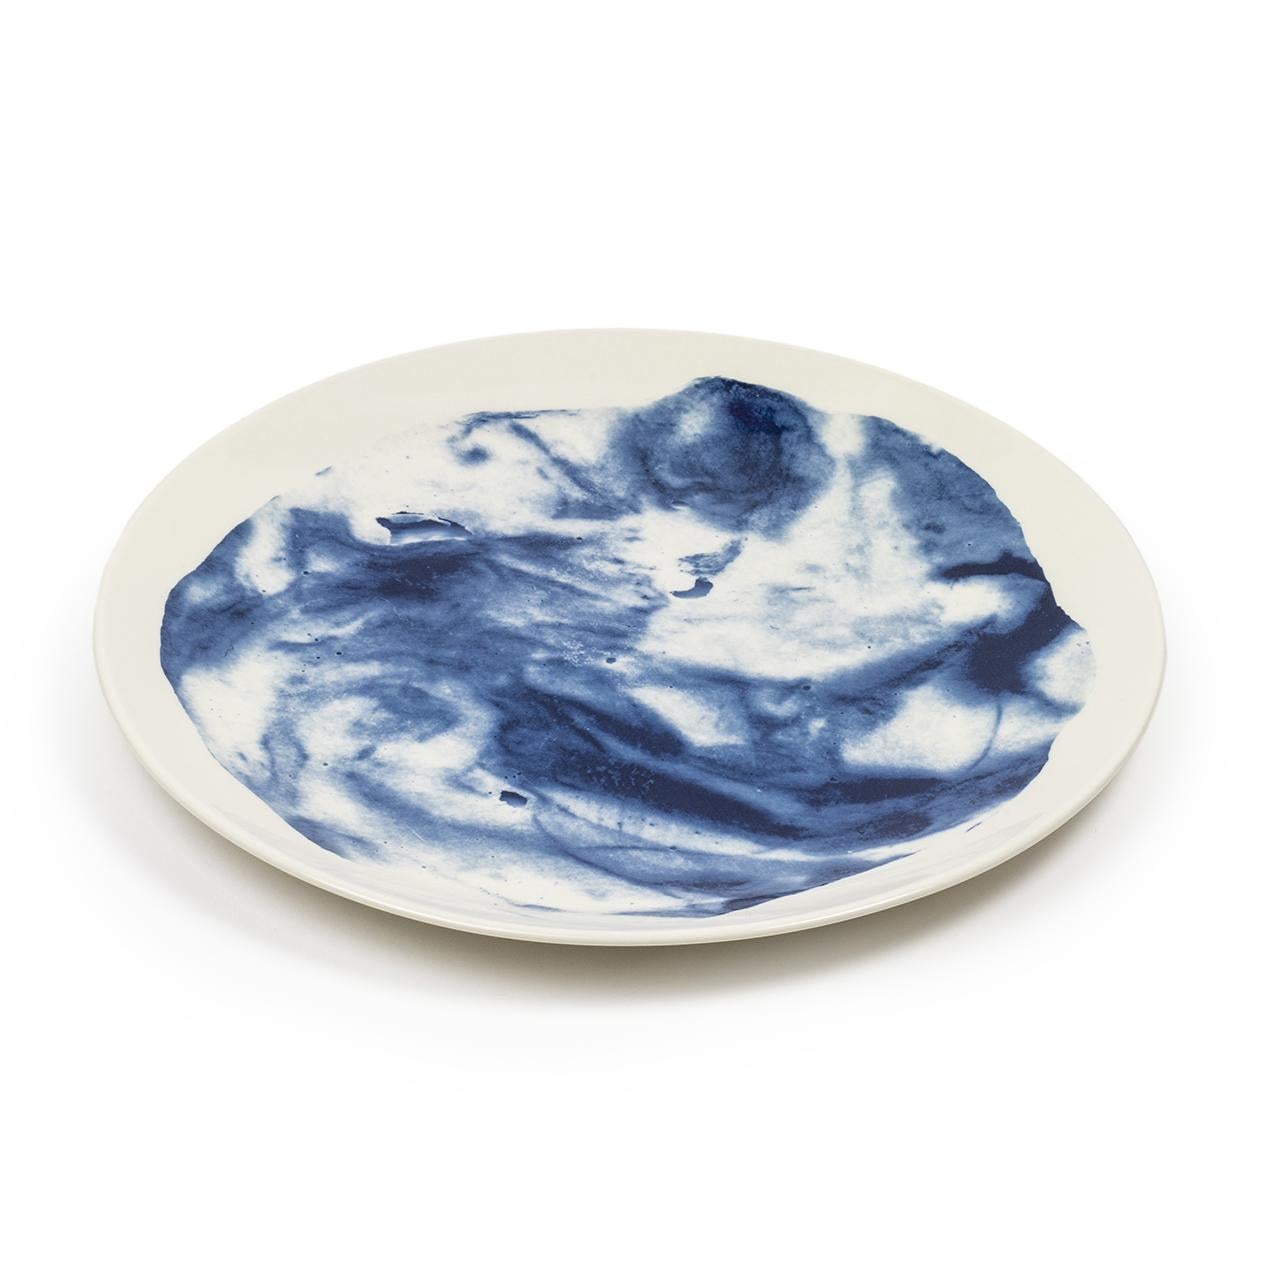 British Contemporary Earthenware Dinner Plate, Interpretation of Traditional Creamware For Sale